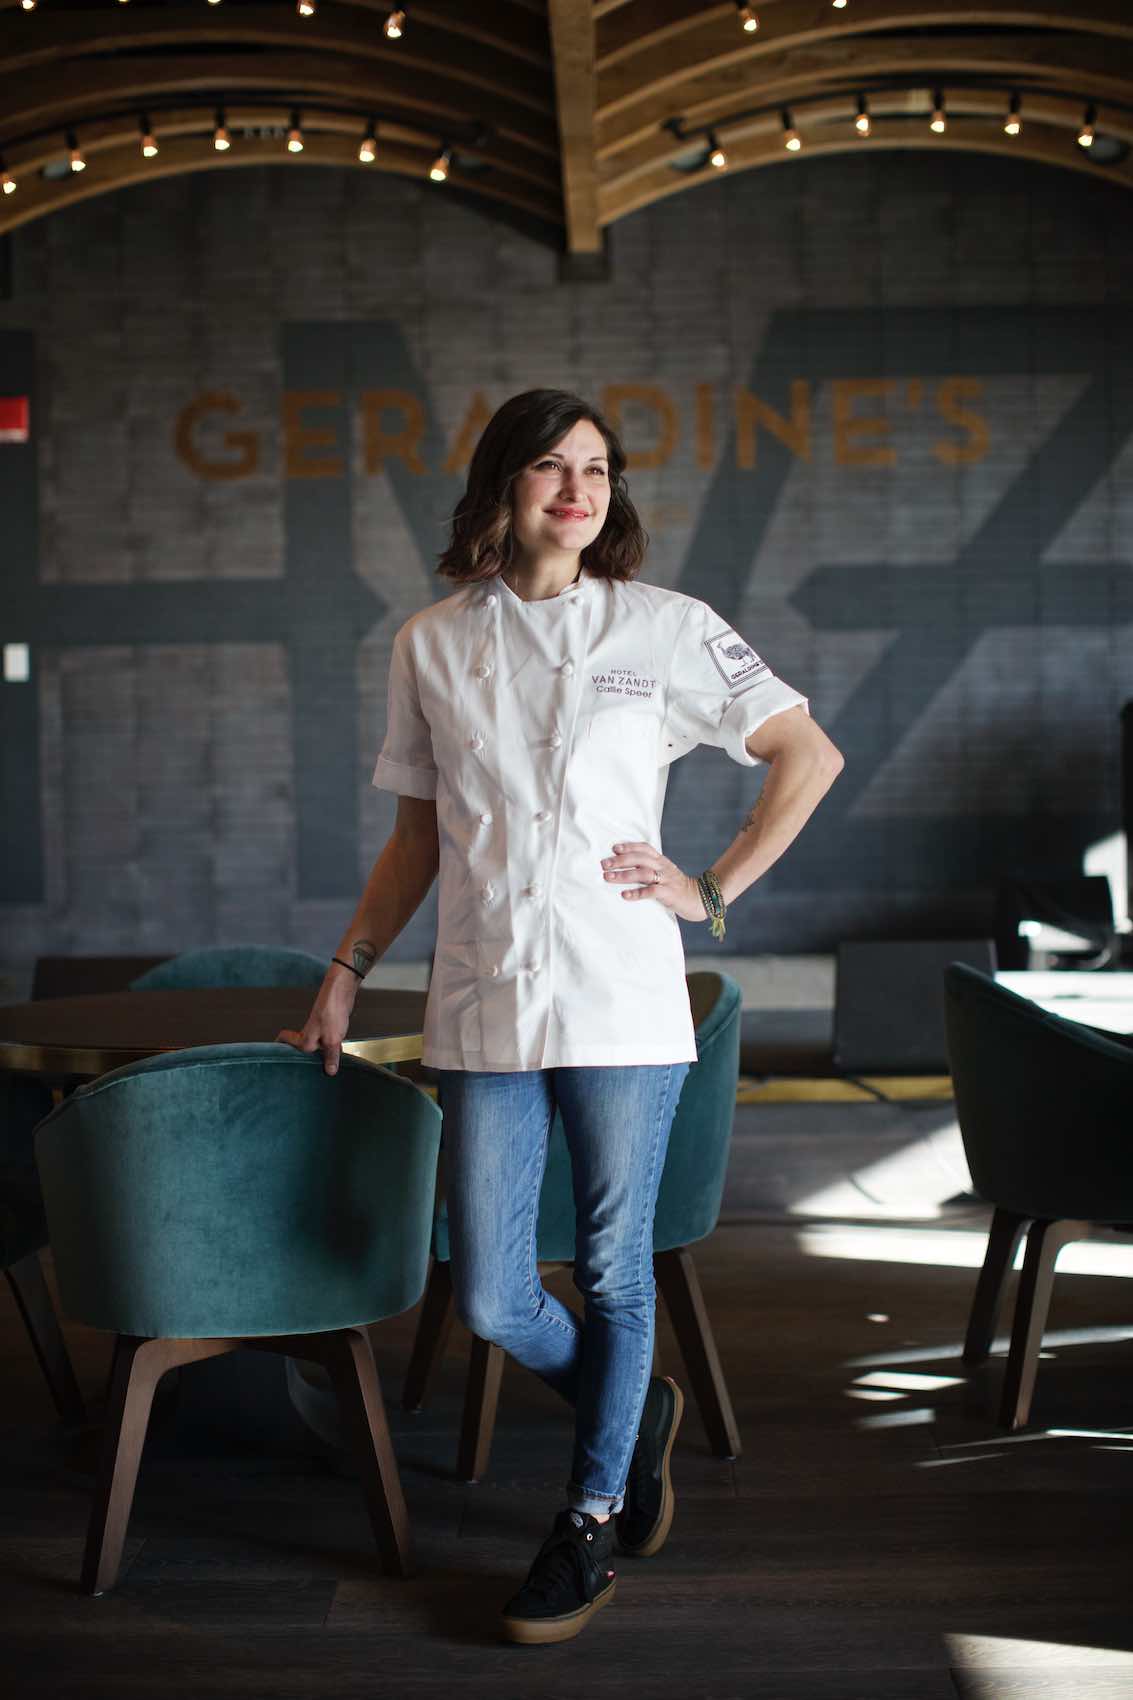 Jody Horton Photography - Chef of Geraldine